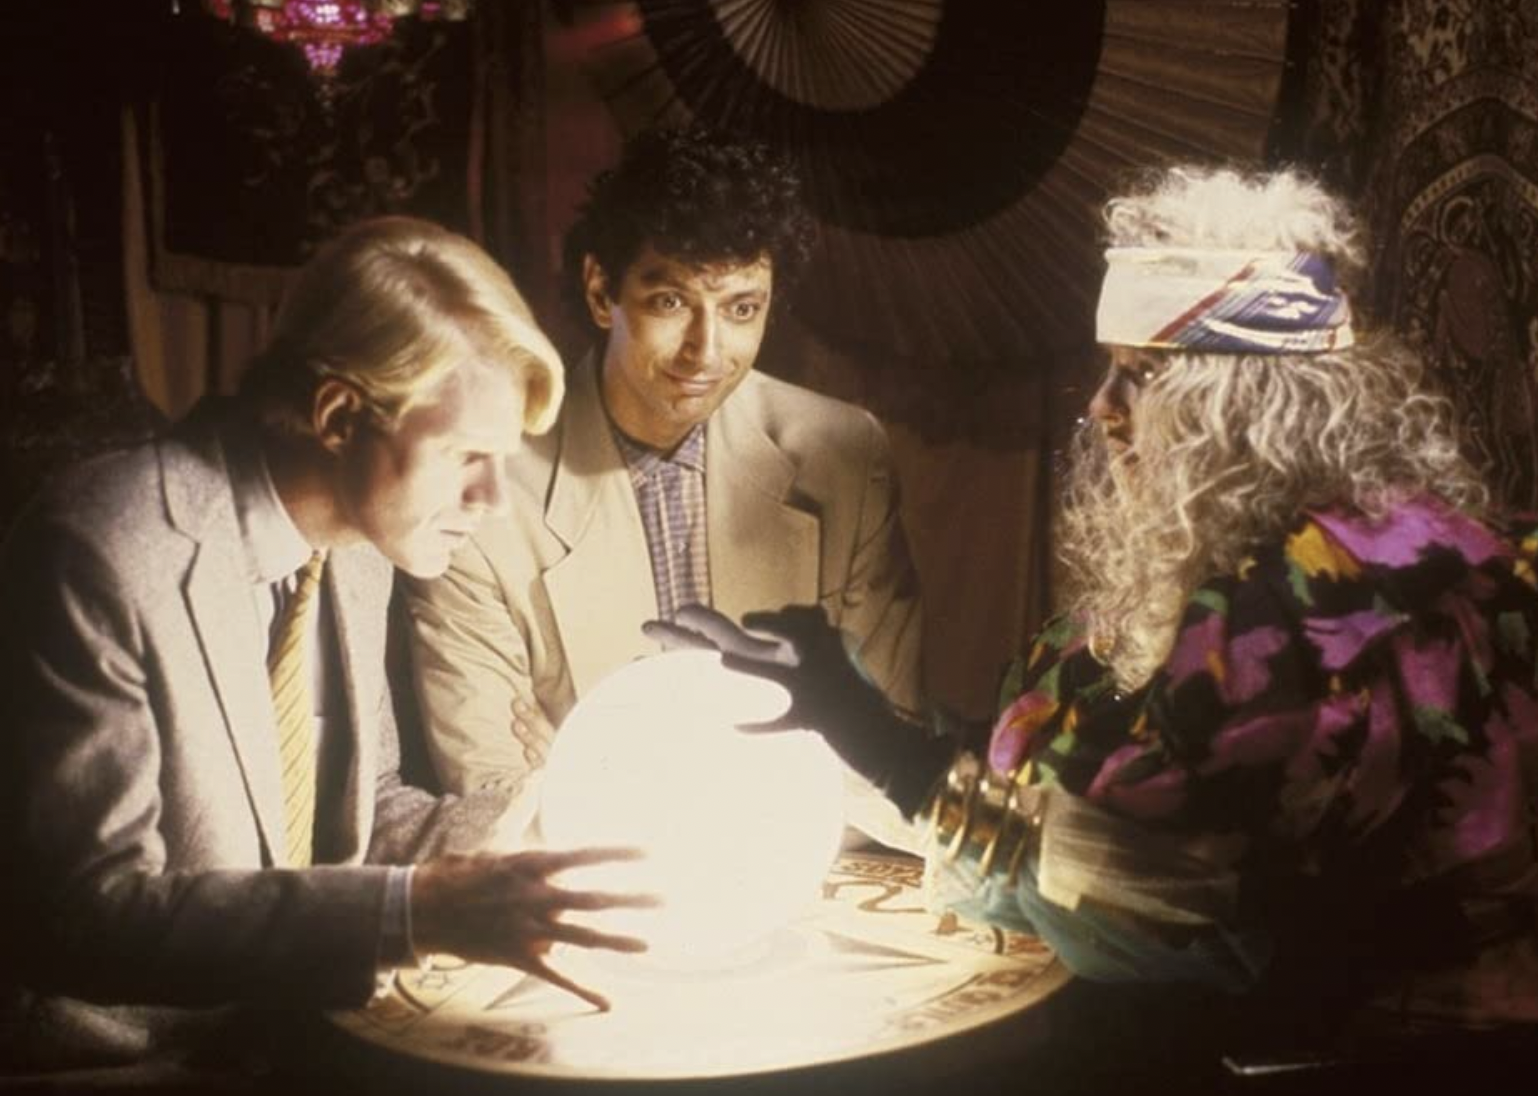 Jeff Goldblum, Ed Begley Jr., and Inge Appelt in "Transylvania 6-5000"